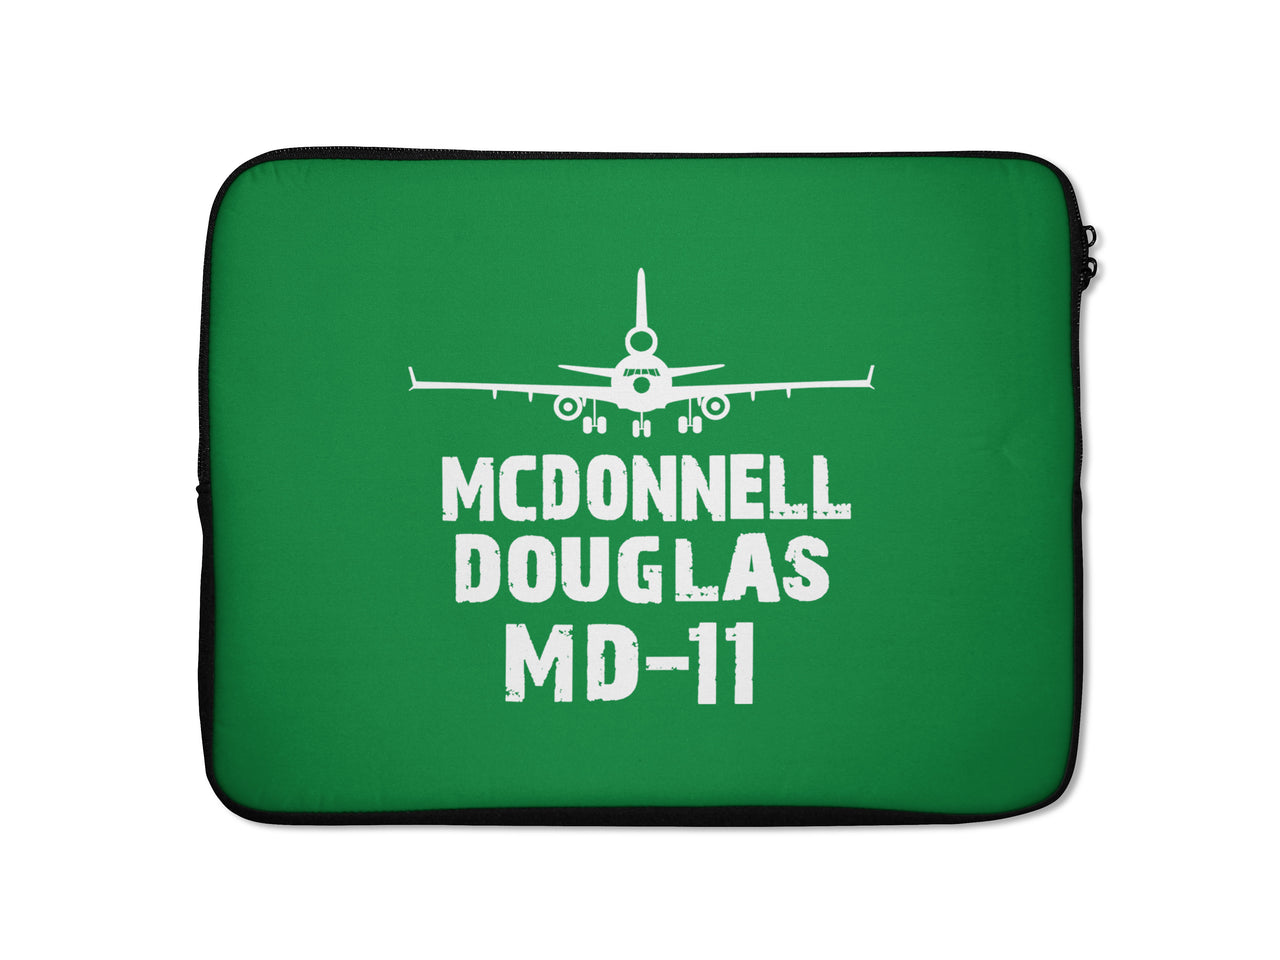 McDonnell Douglas MD-11 & Plane Designed Laptop & Tablet Cases